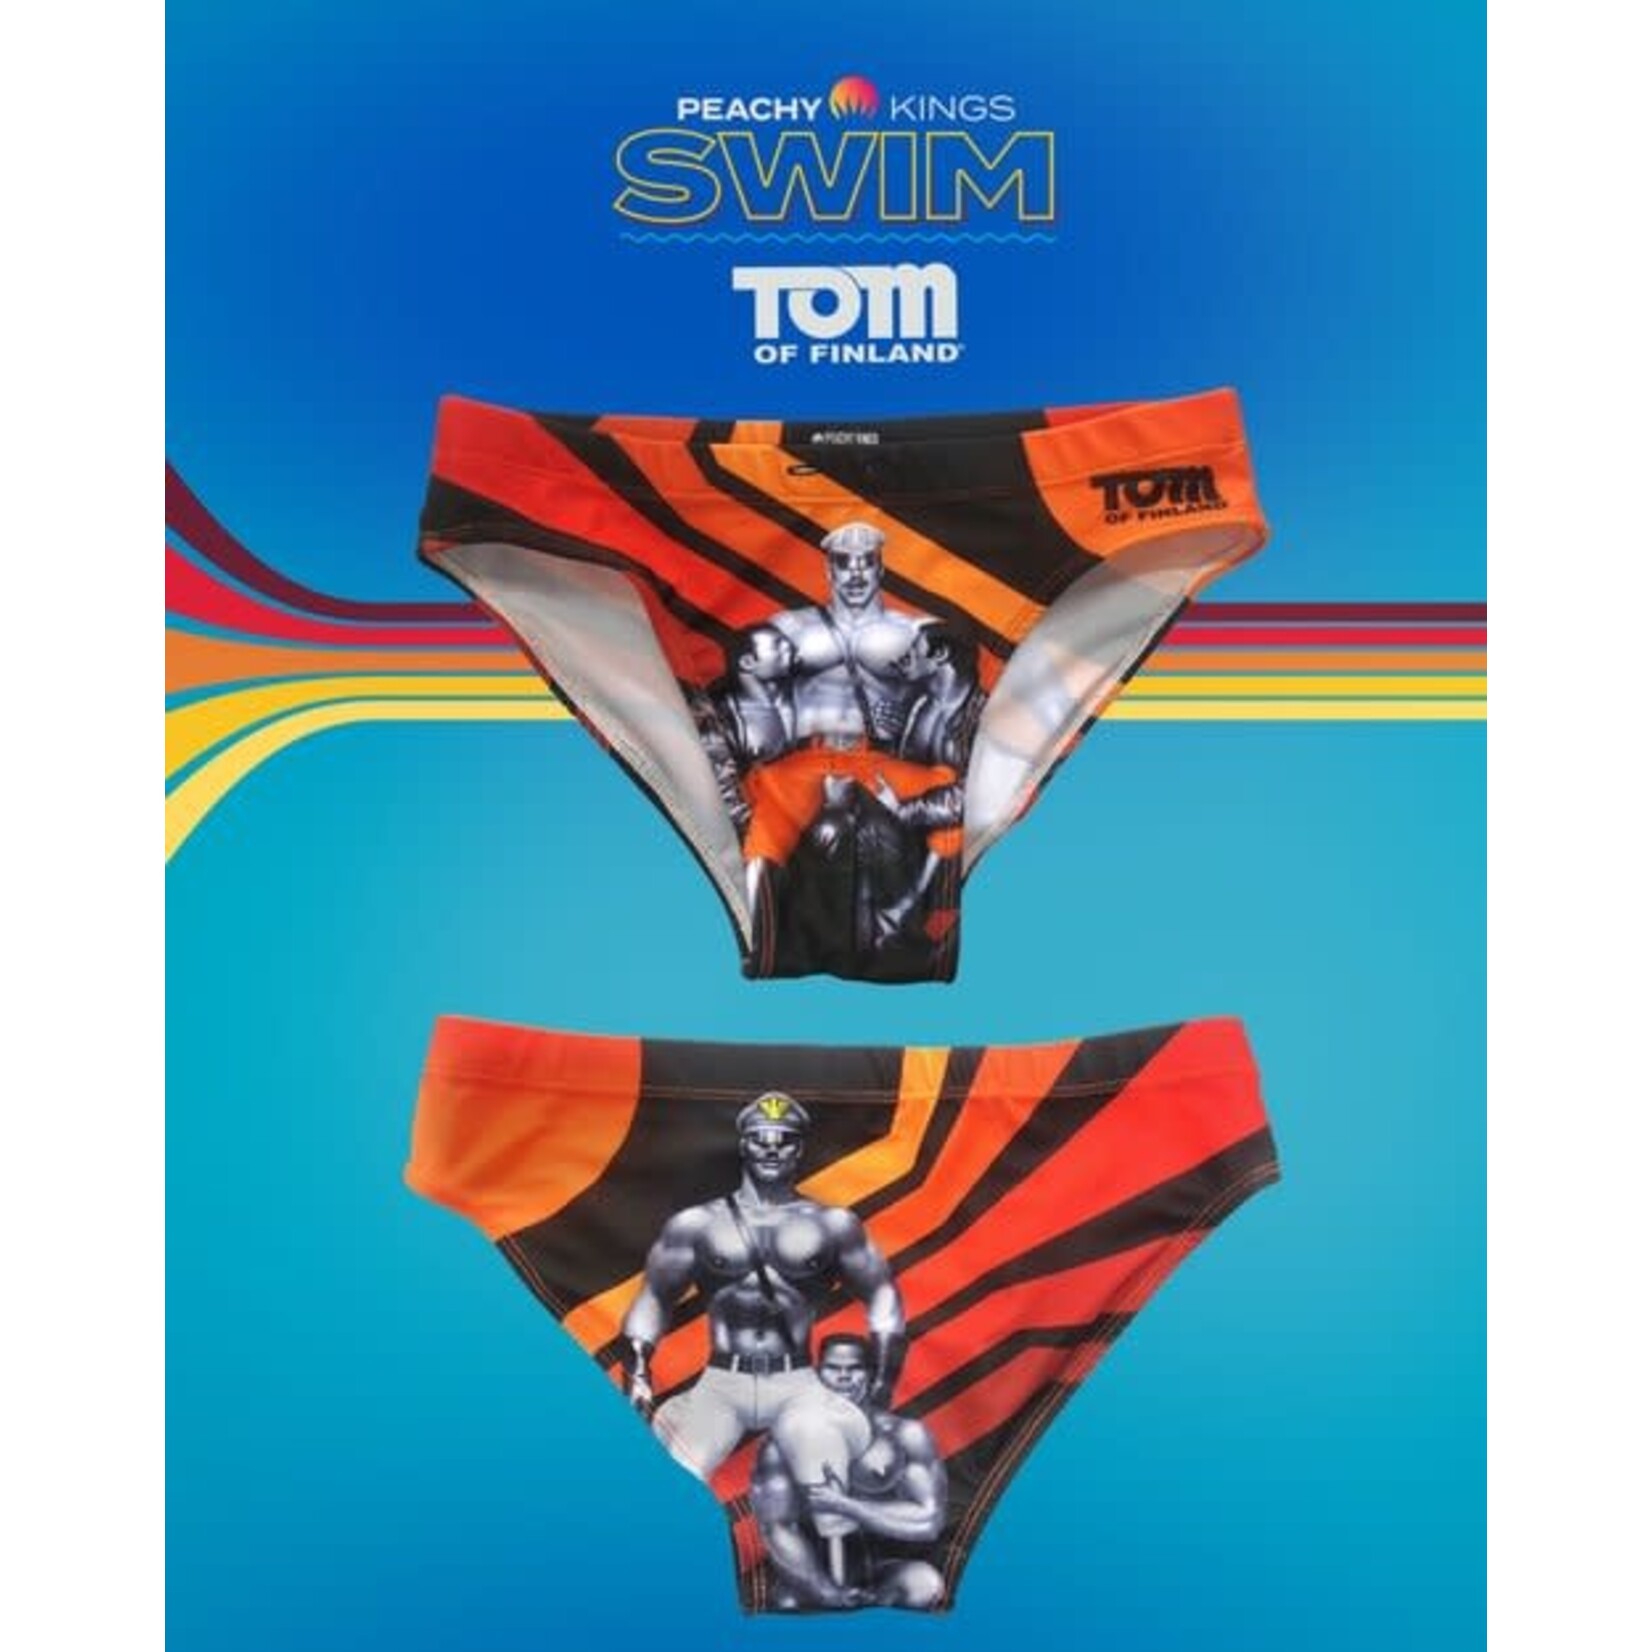 Peachy Kings SWIM Tom of Finland “RETRO” Swim Briefs